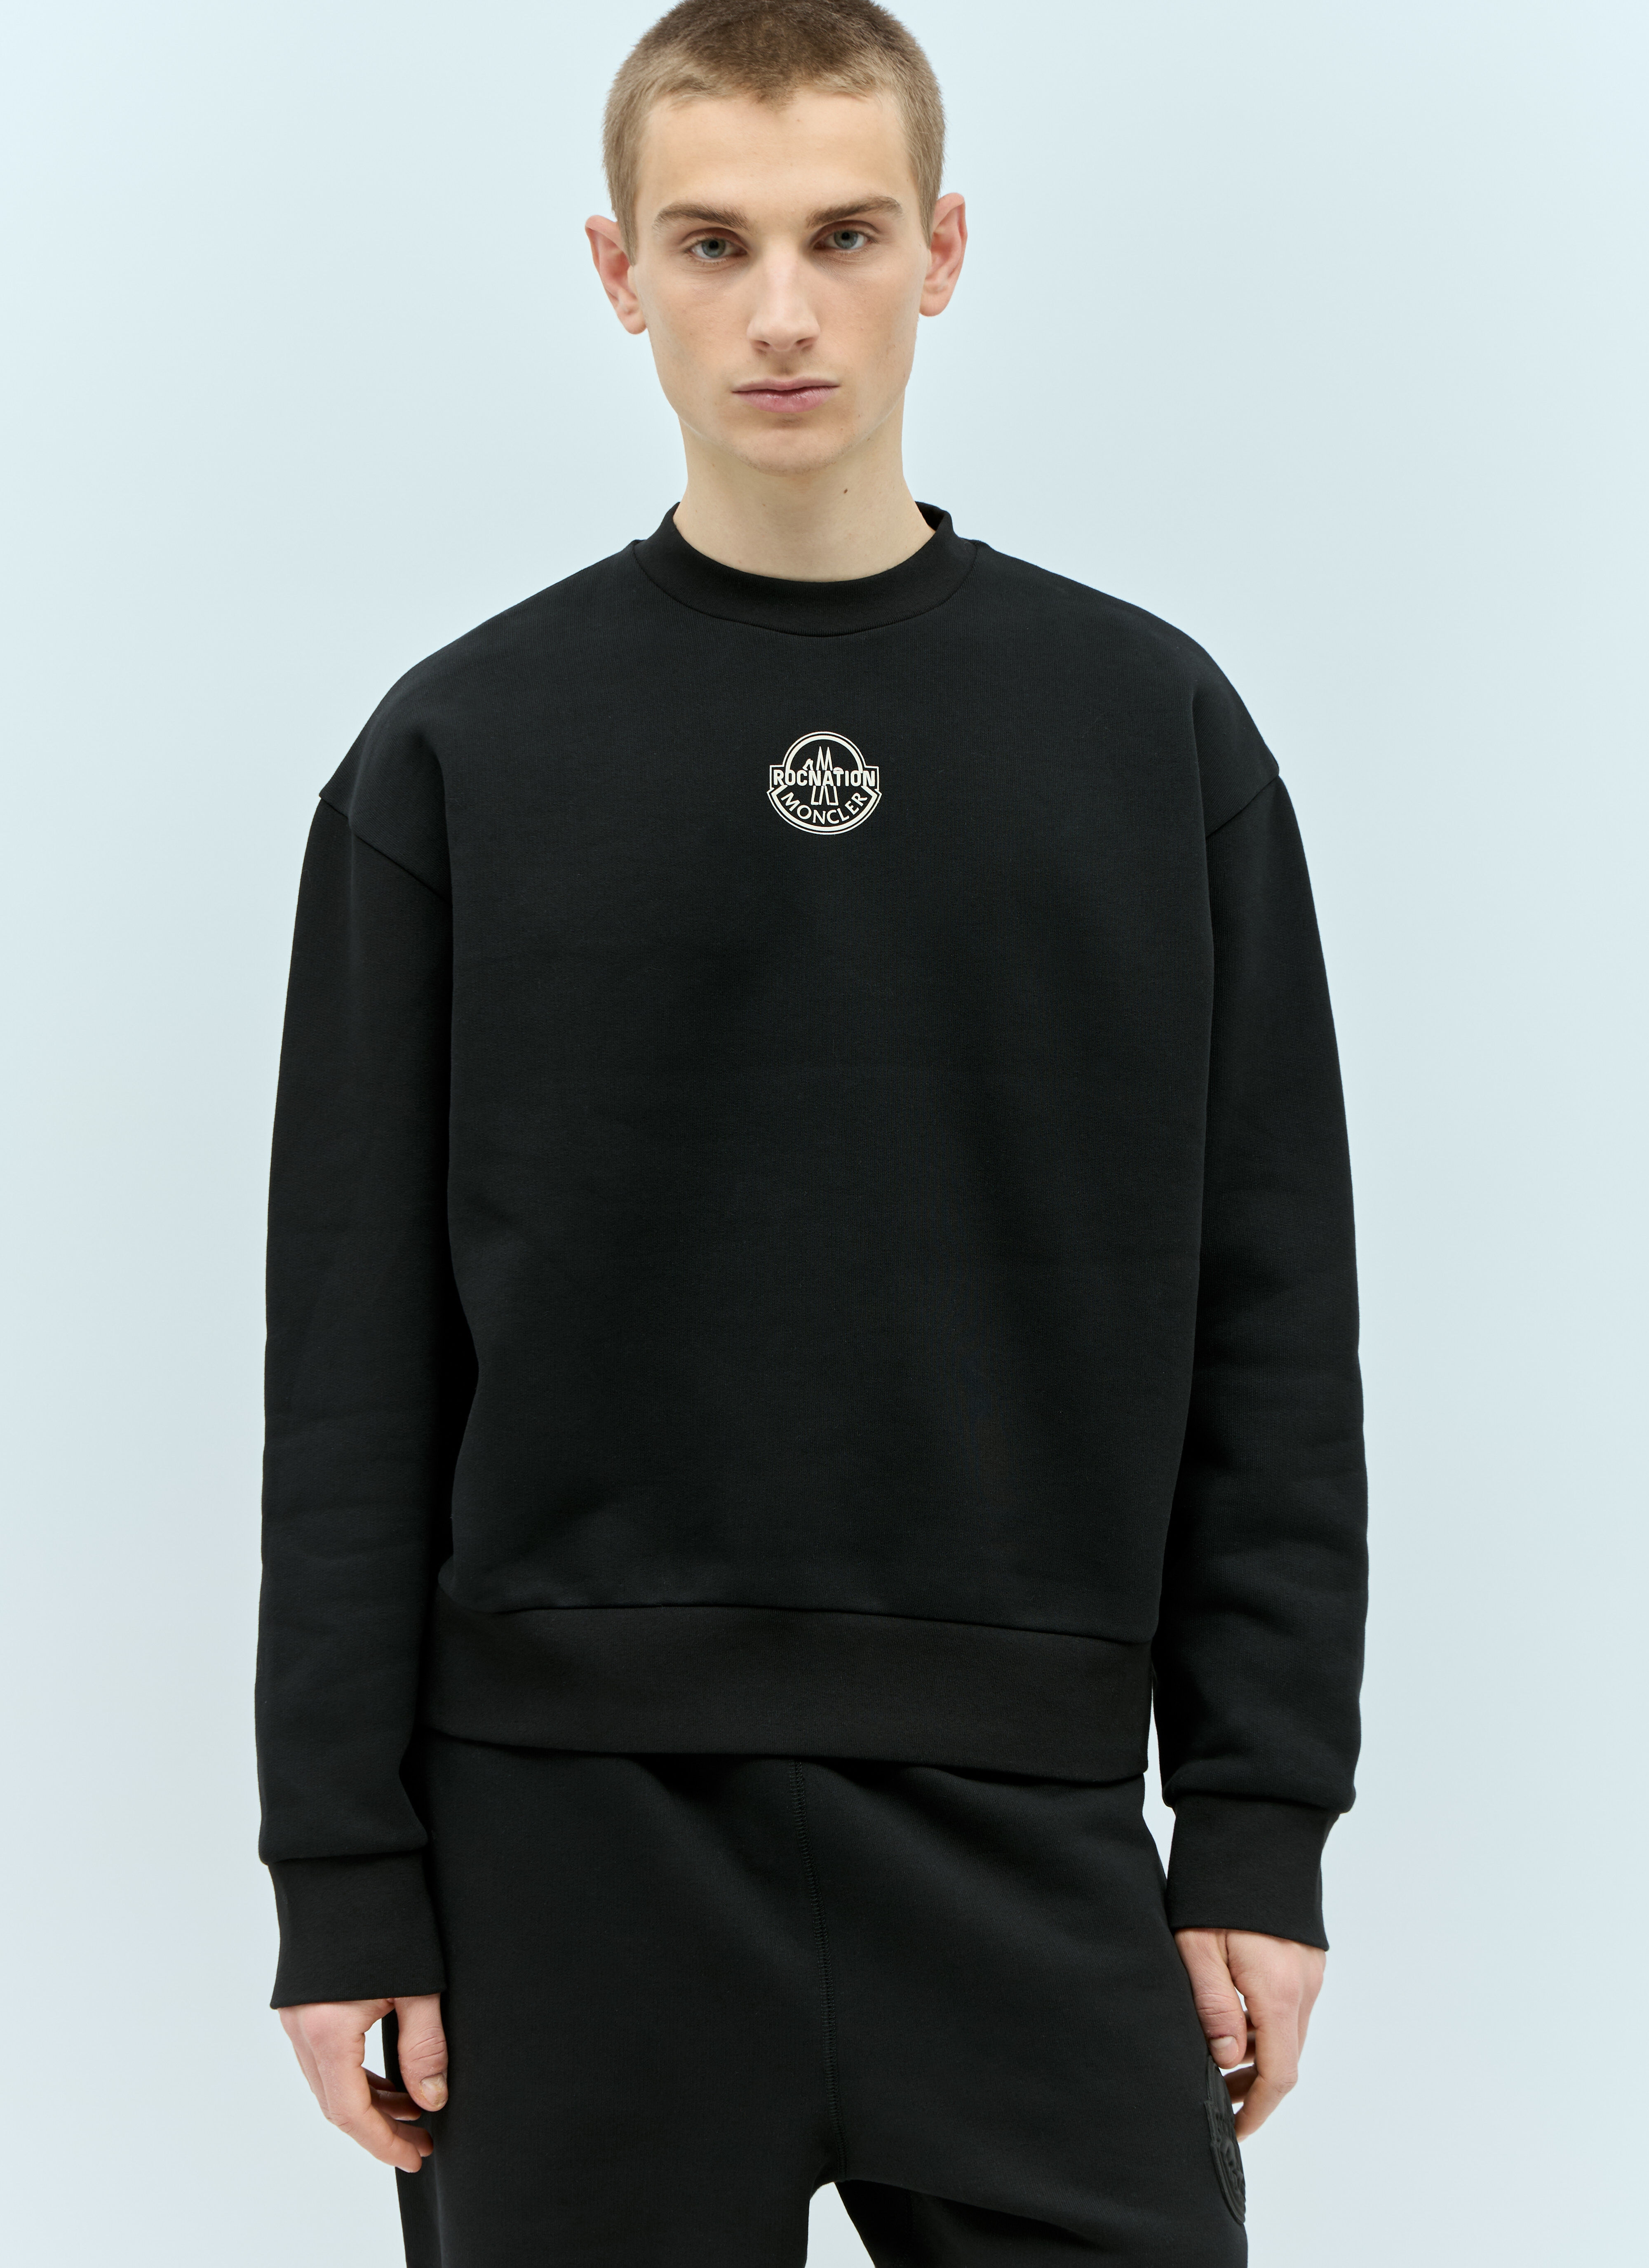 Moncler x Roc Nation designed by Jay-Z Logo Applique Sweatshirt Black mrn0156002